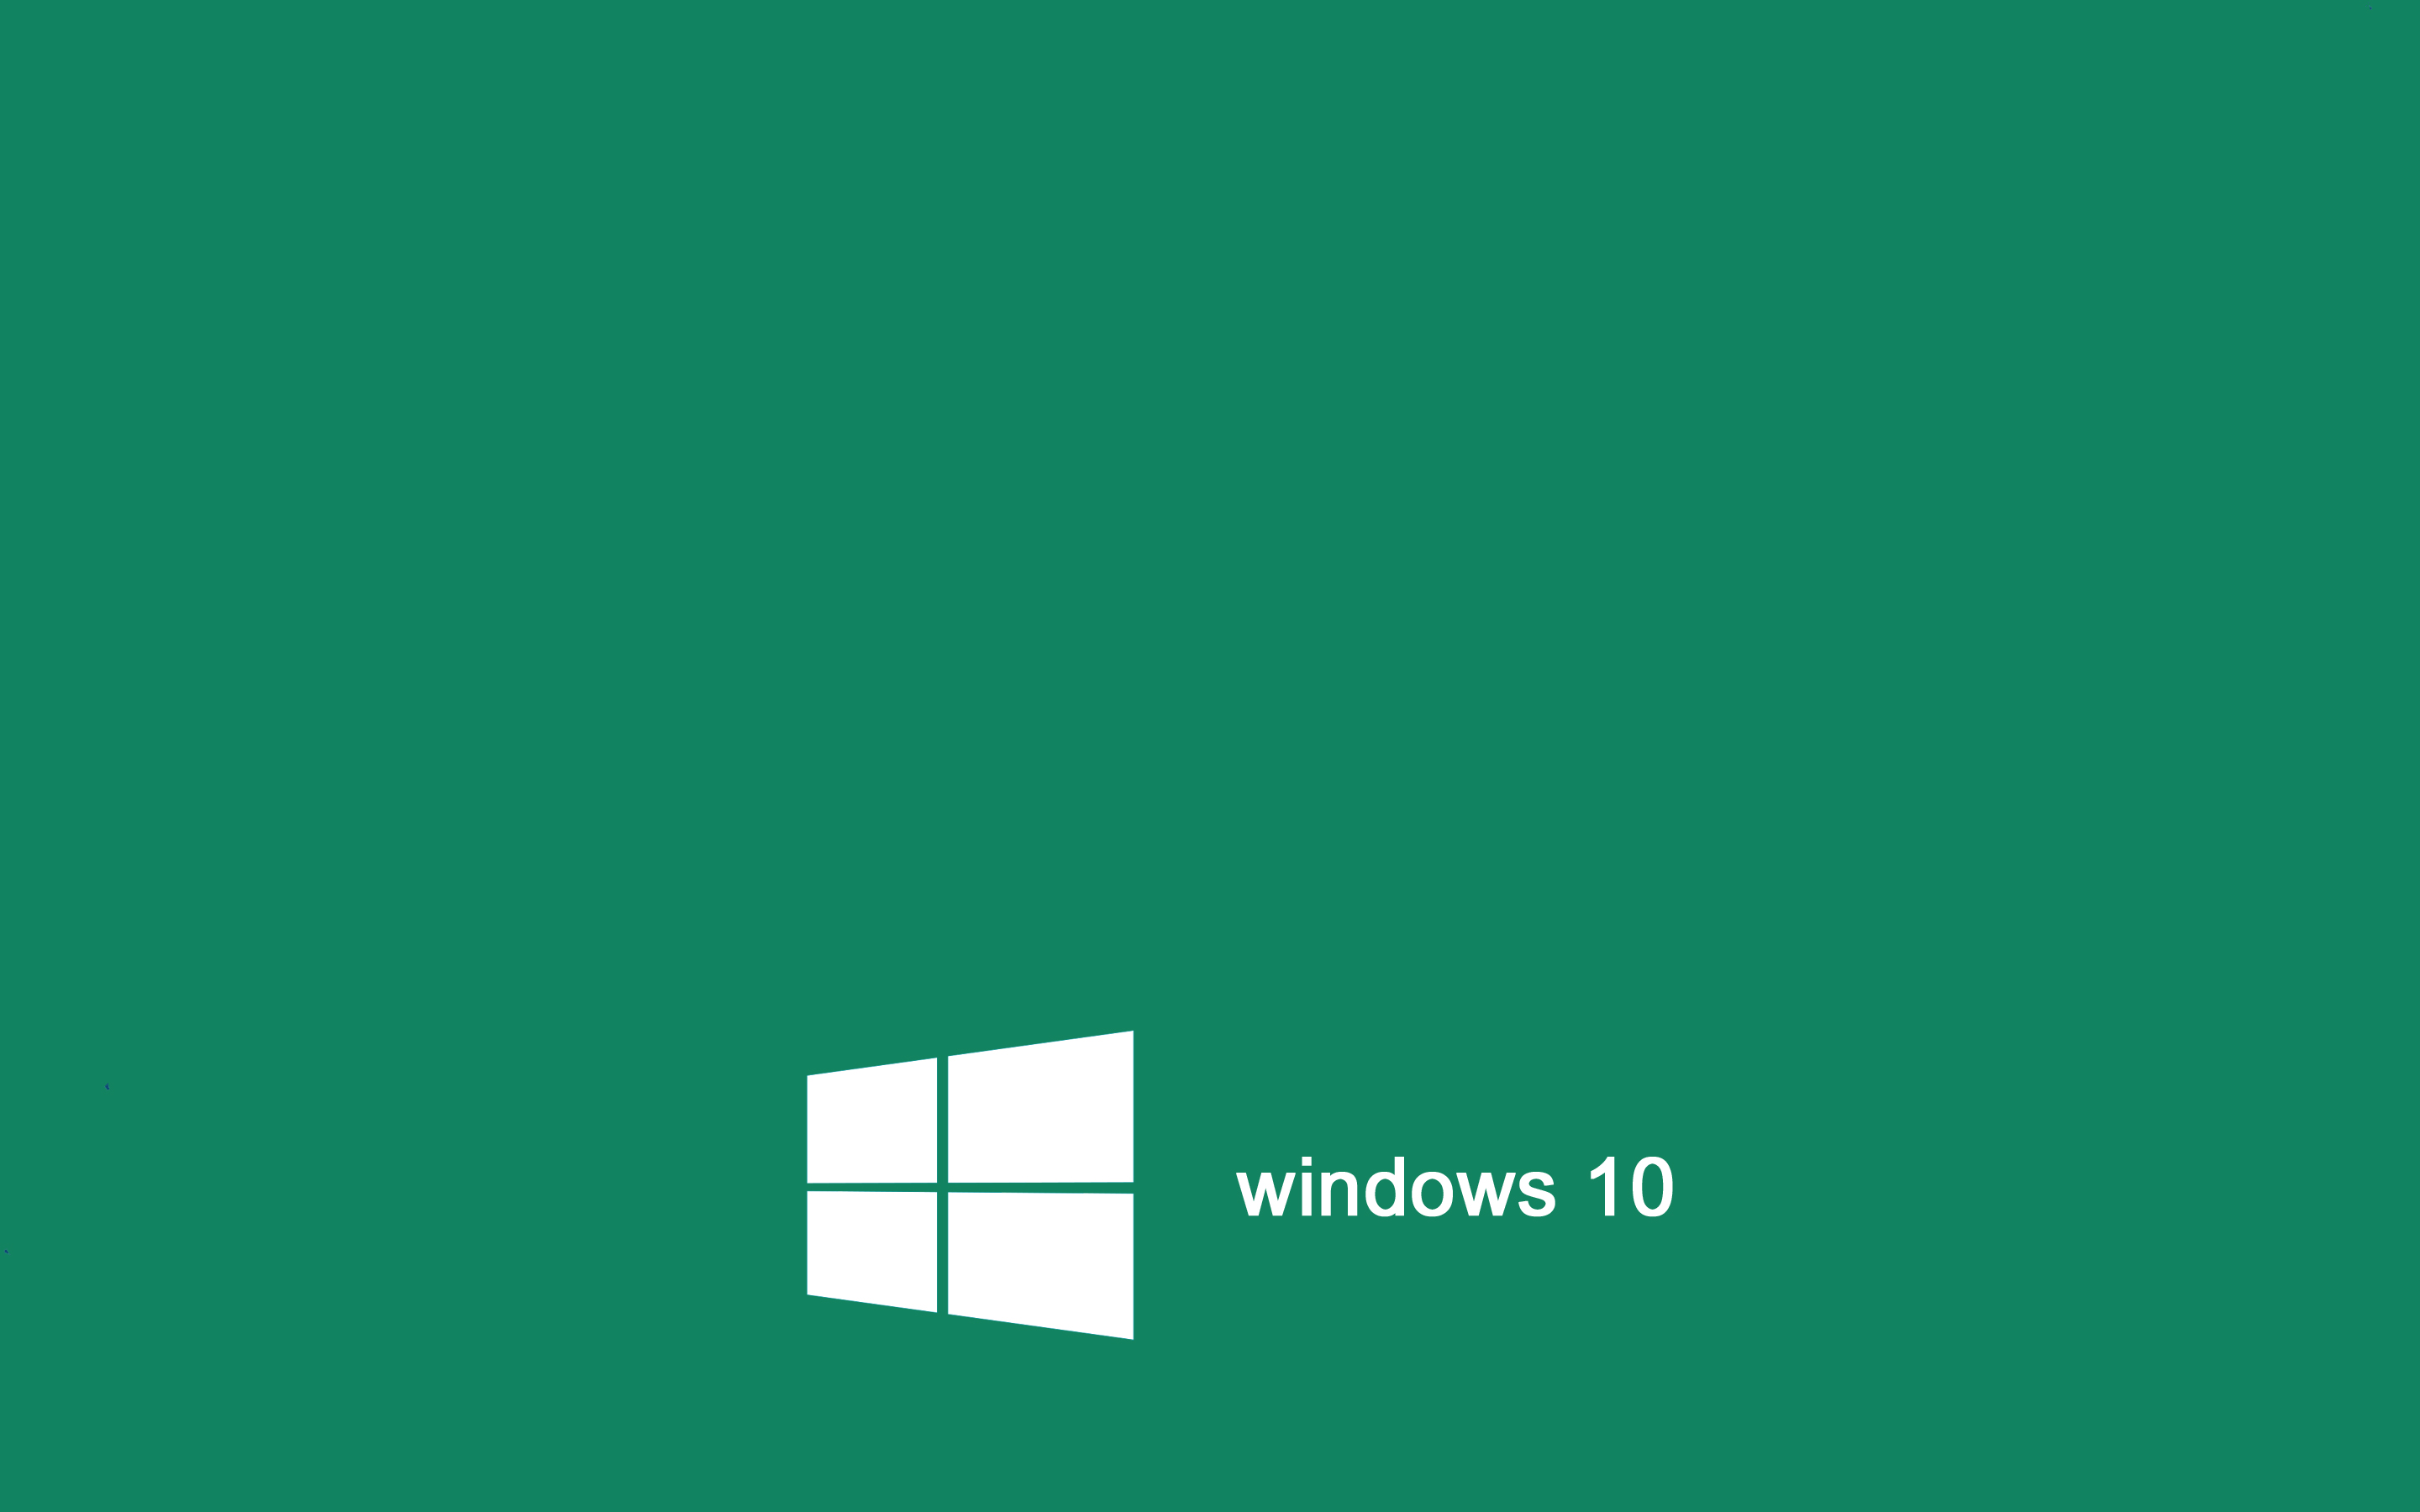 Green screen appearance on my windows laptop - Microsoft Q&A